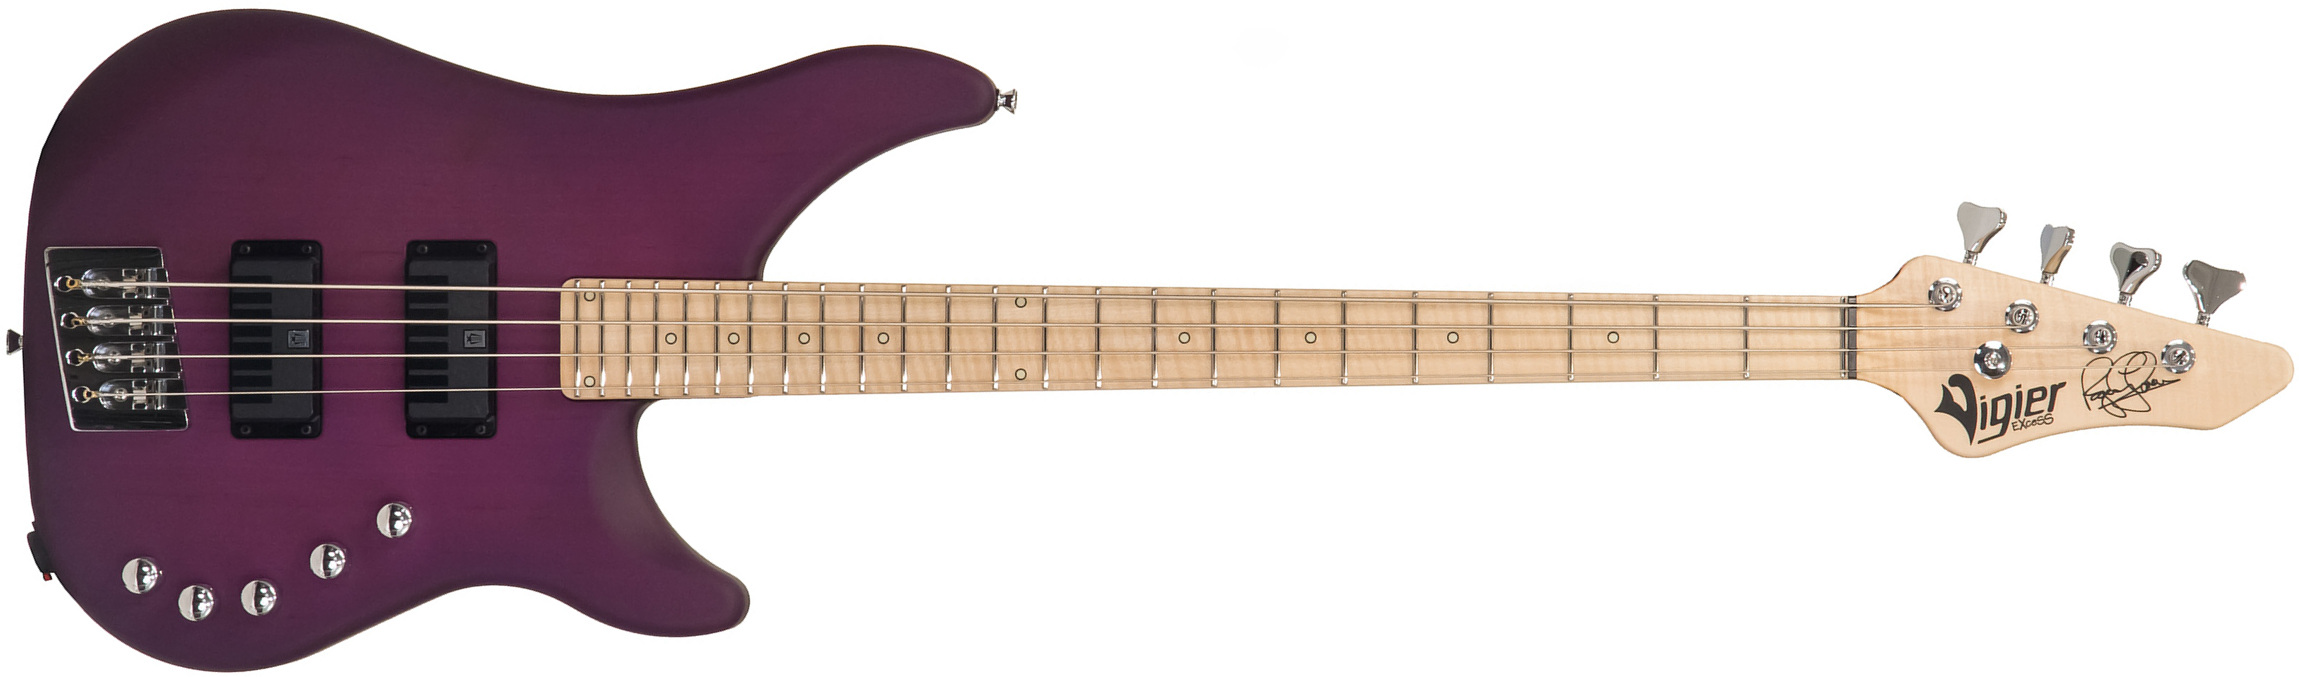 Vigier Roger Glover Excess Original Signature Active Rw - Clear Purple - Solid body elektrische bas - Main picture